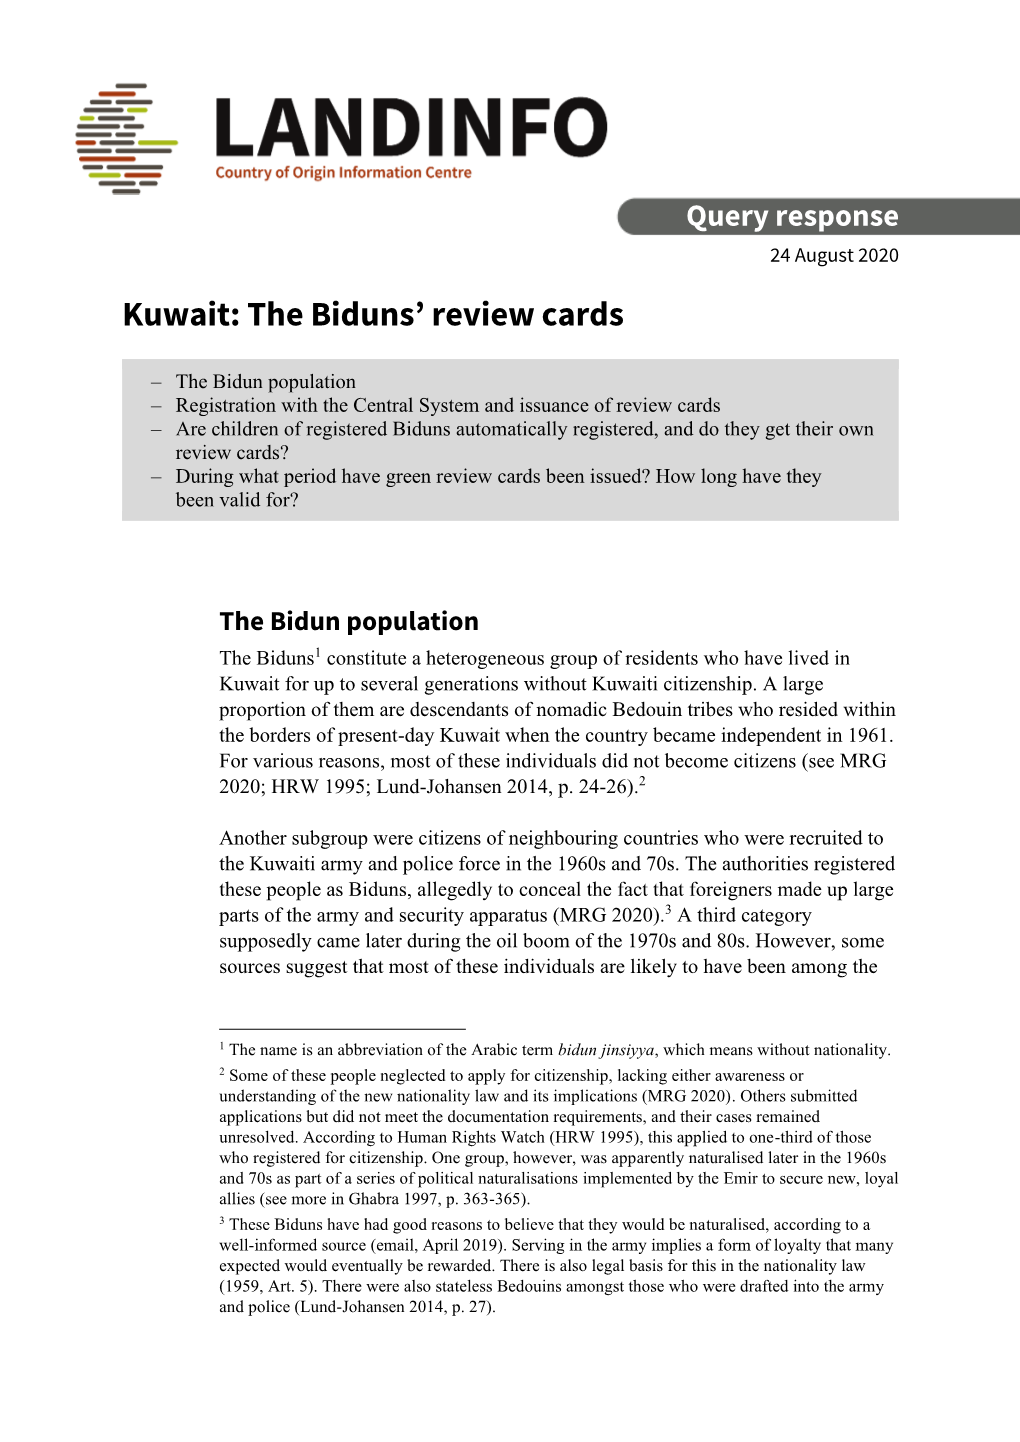 Kuwait: the Biduns' Review Cards